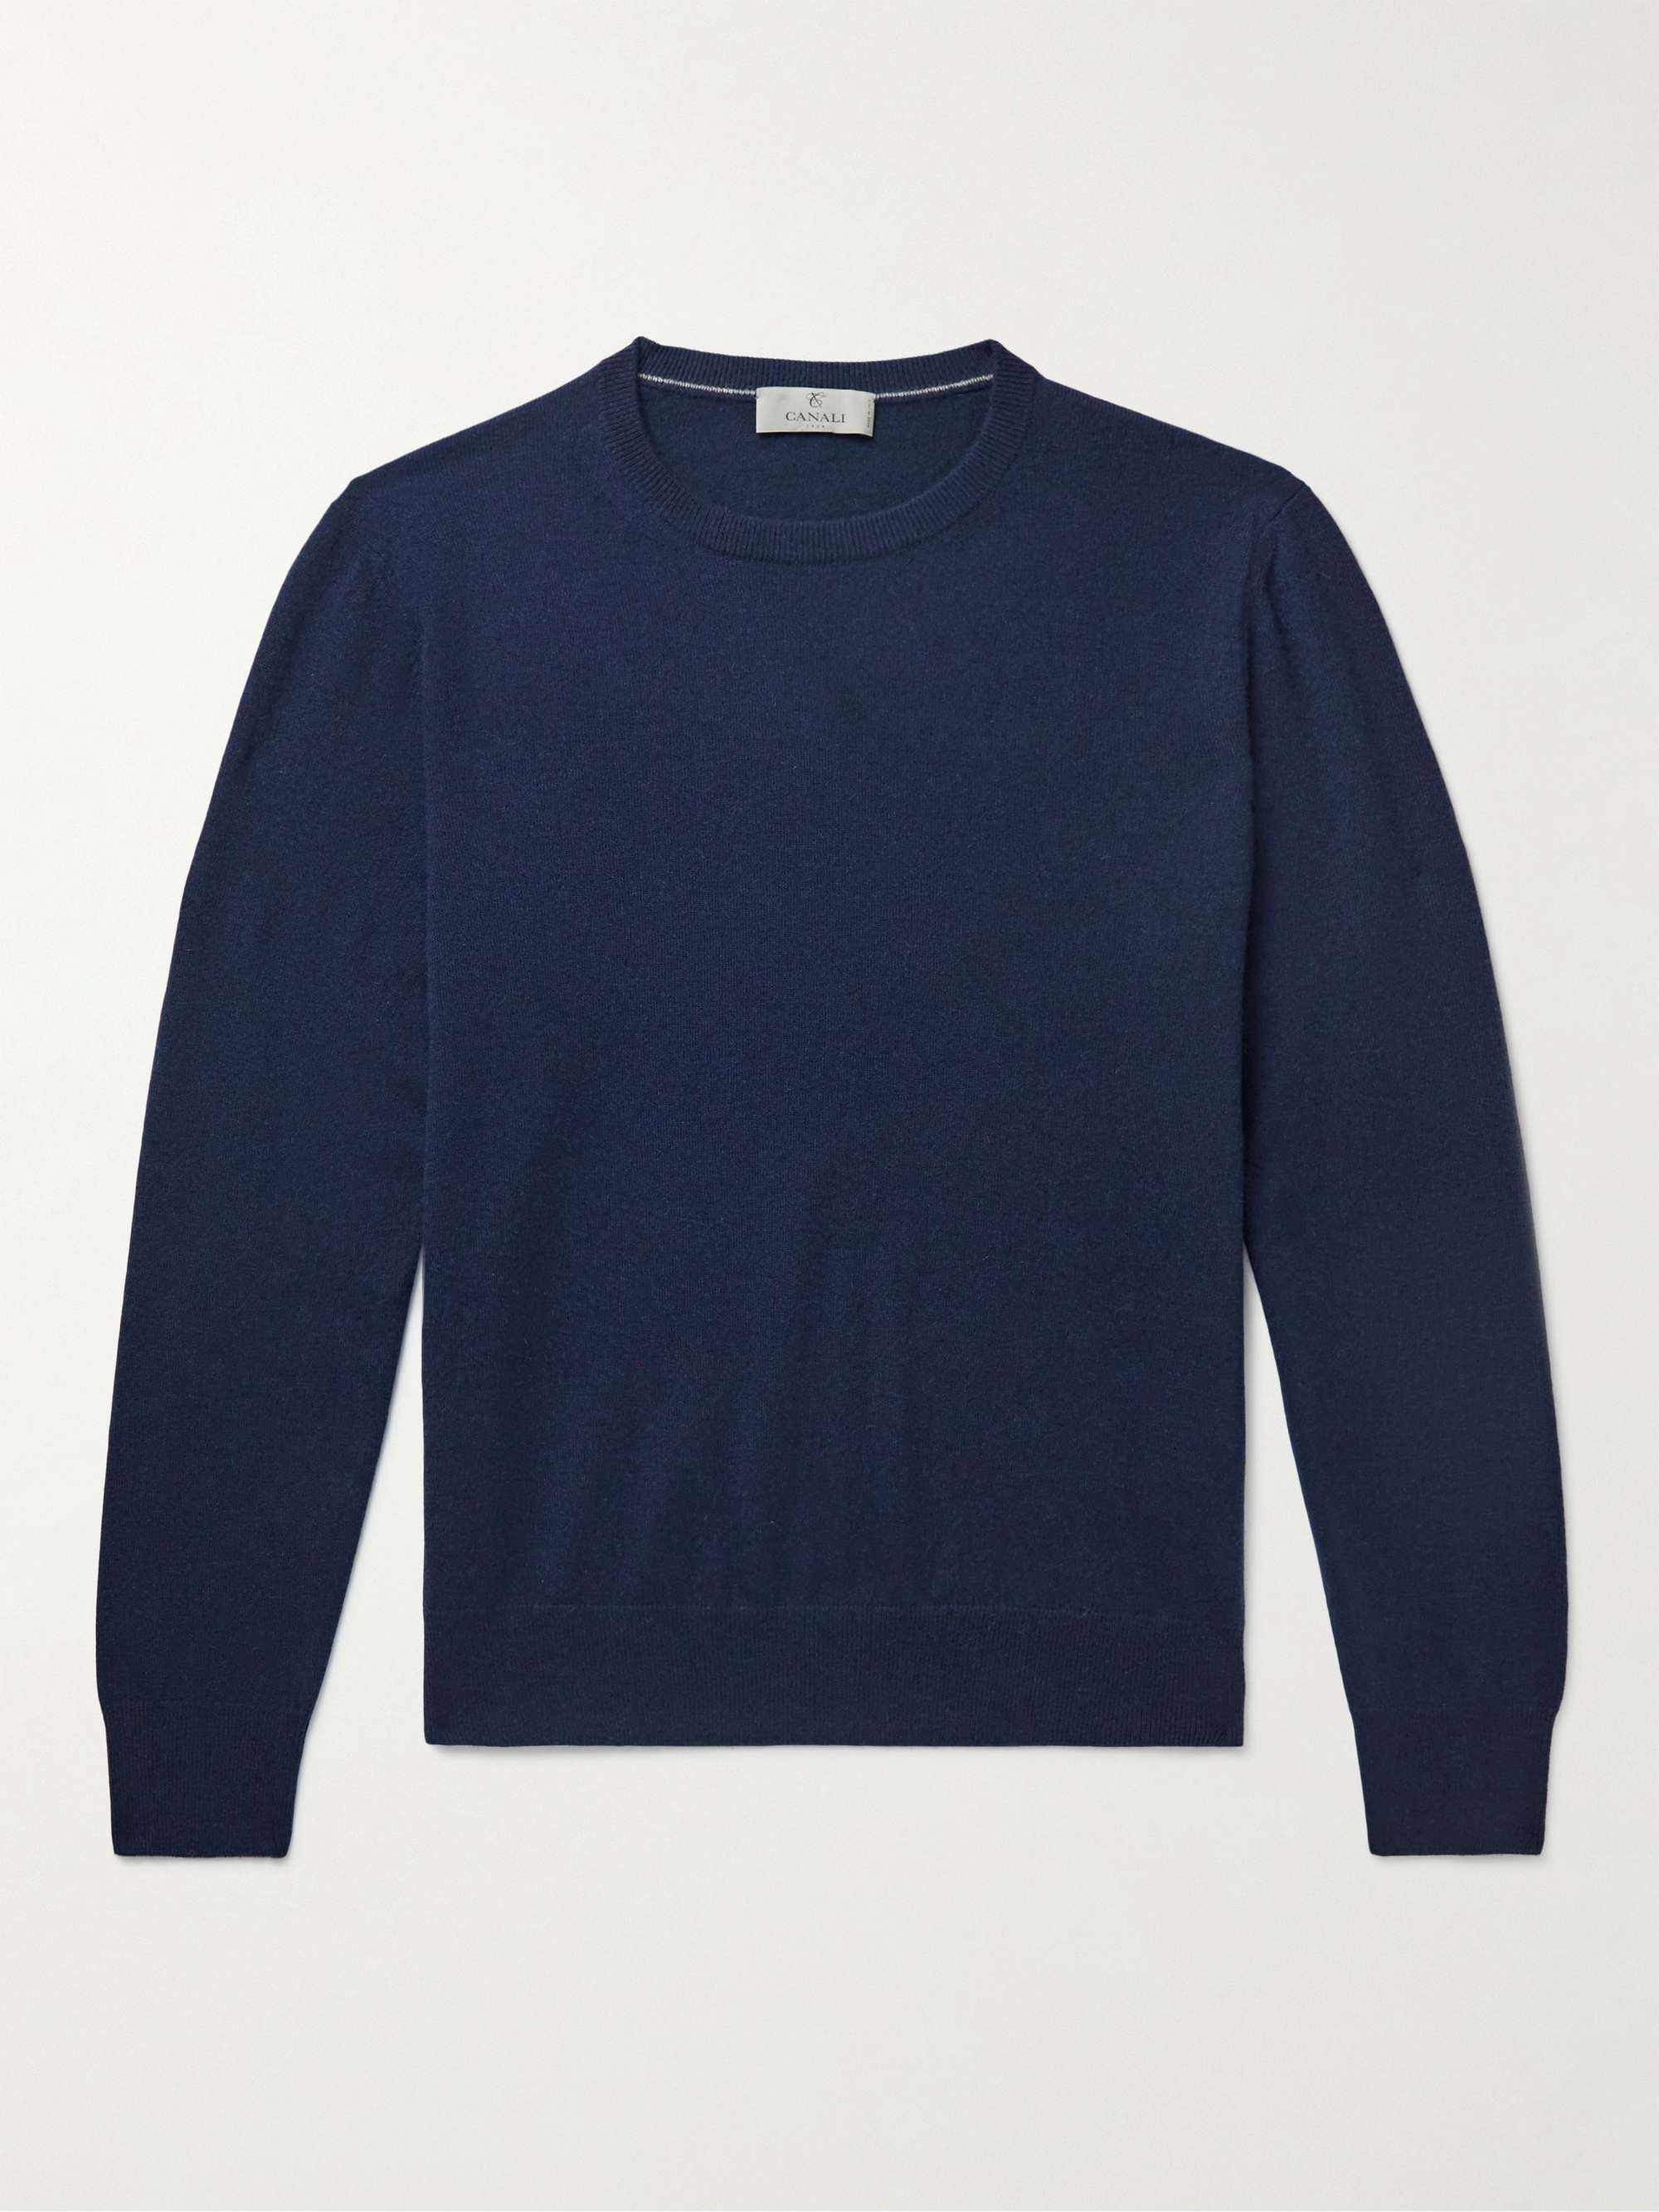 CANALI Cashmere Sweater for Men | MR PORTER